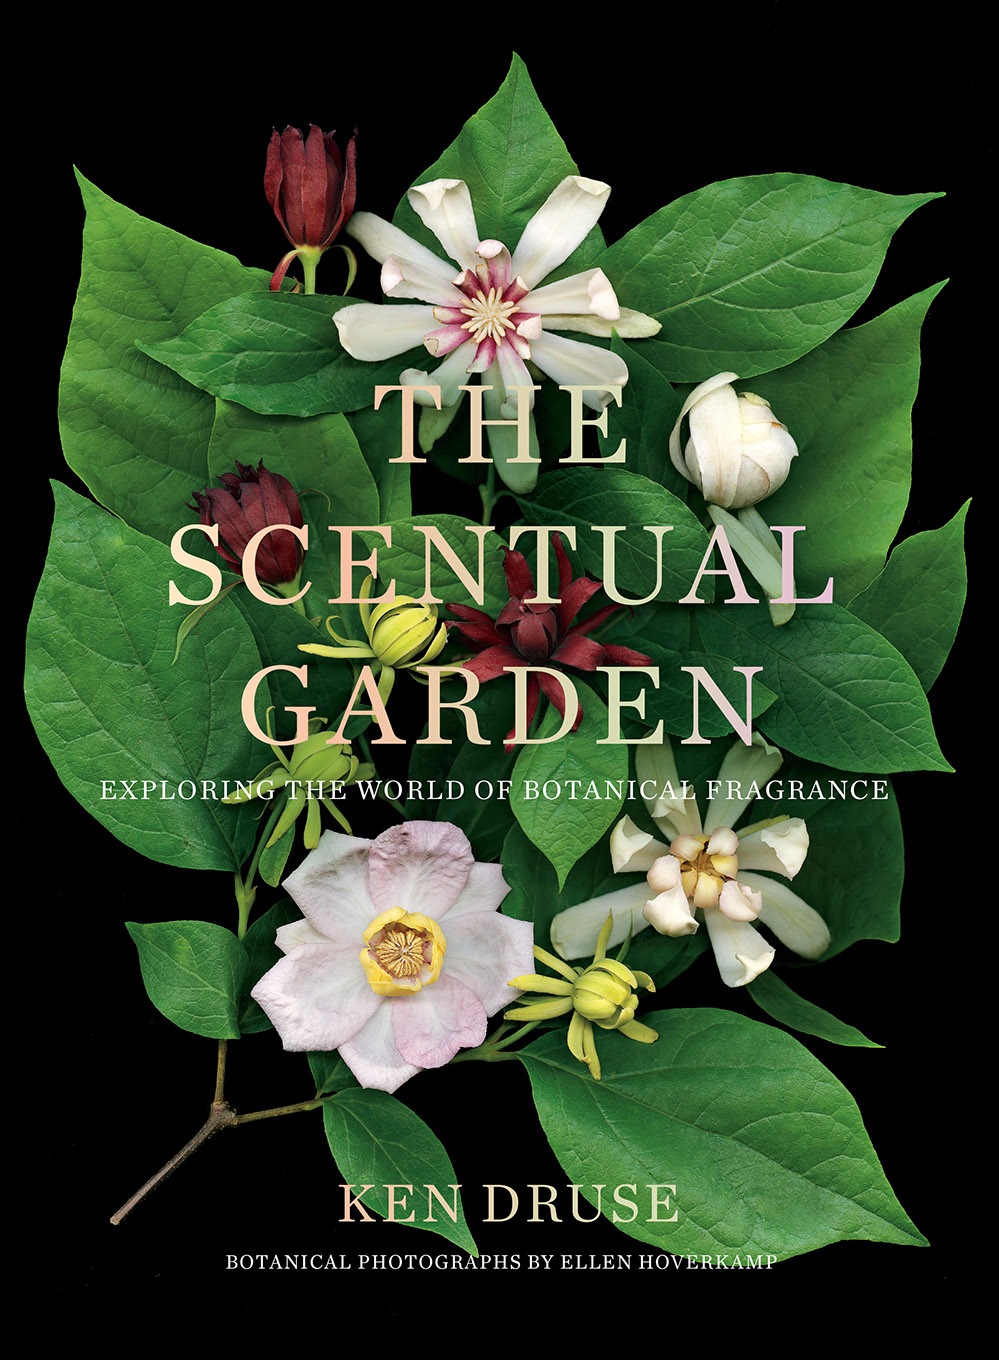 Download Scentual Garden: Exploring the World of Botanical Fragrance - Ken Druse file in PDF